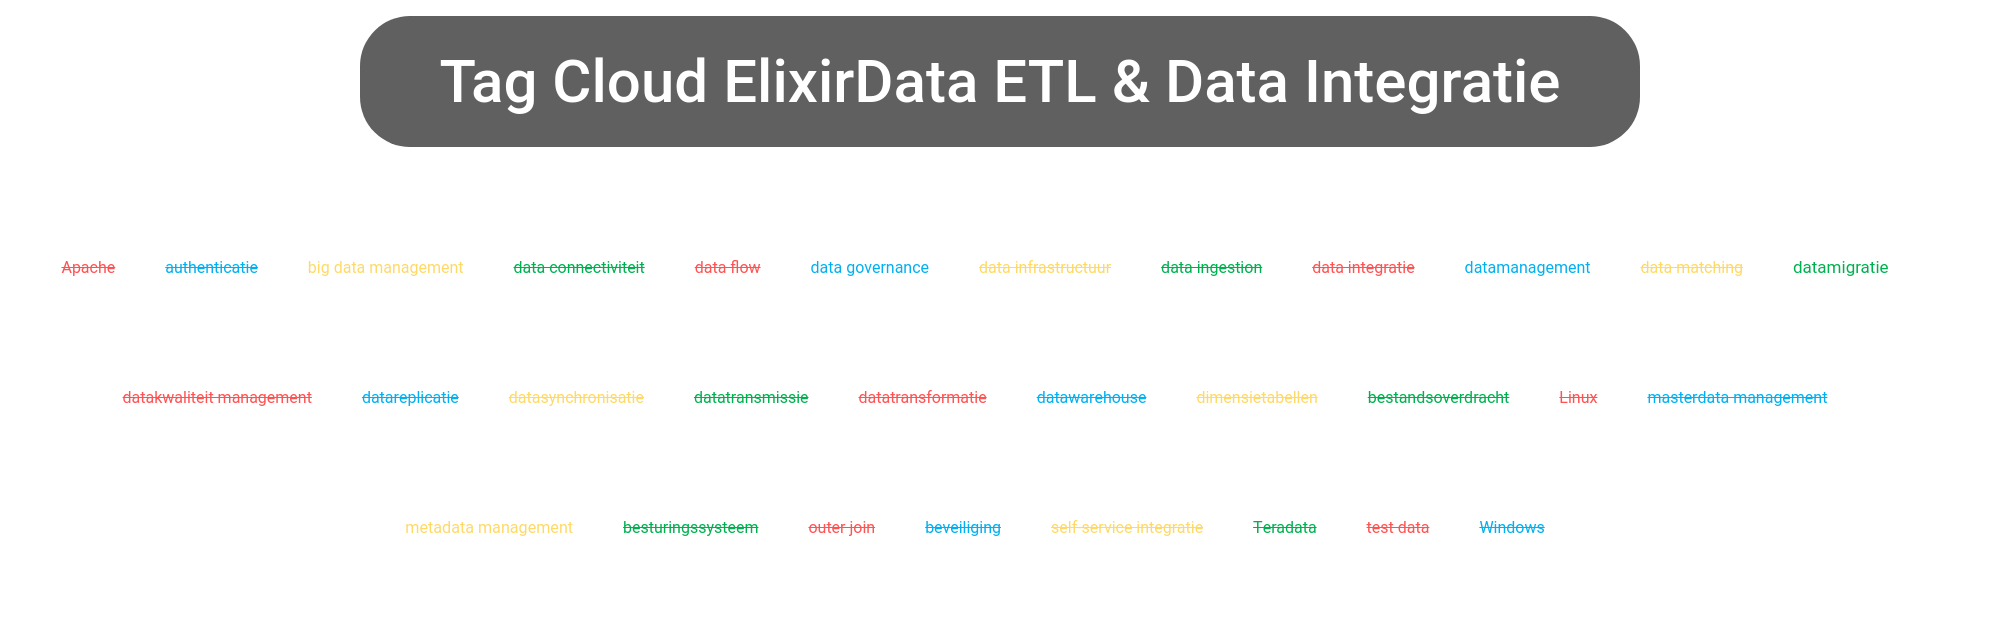 Tag cloud van Elixir Data Platform tools.